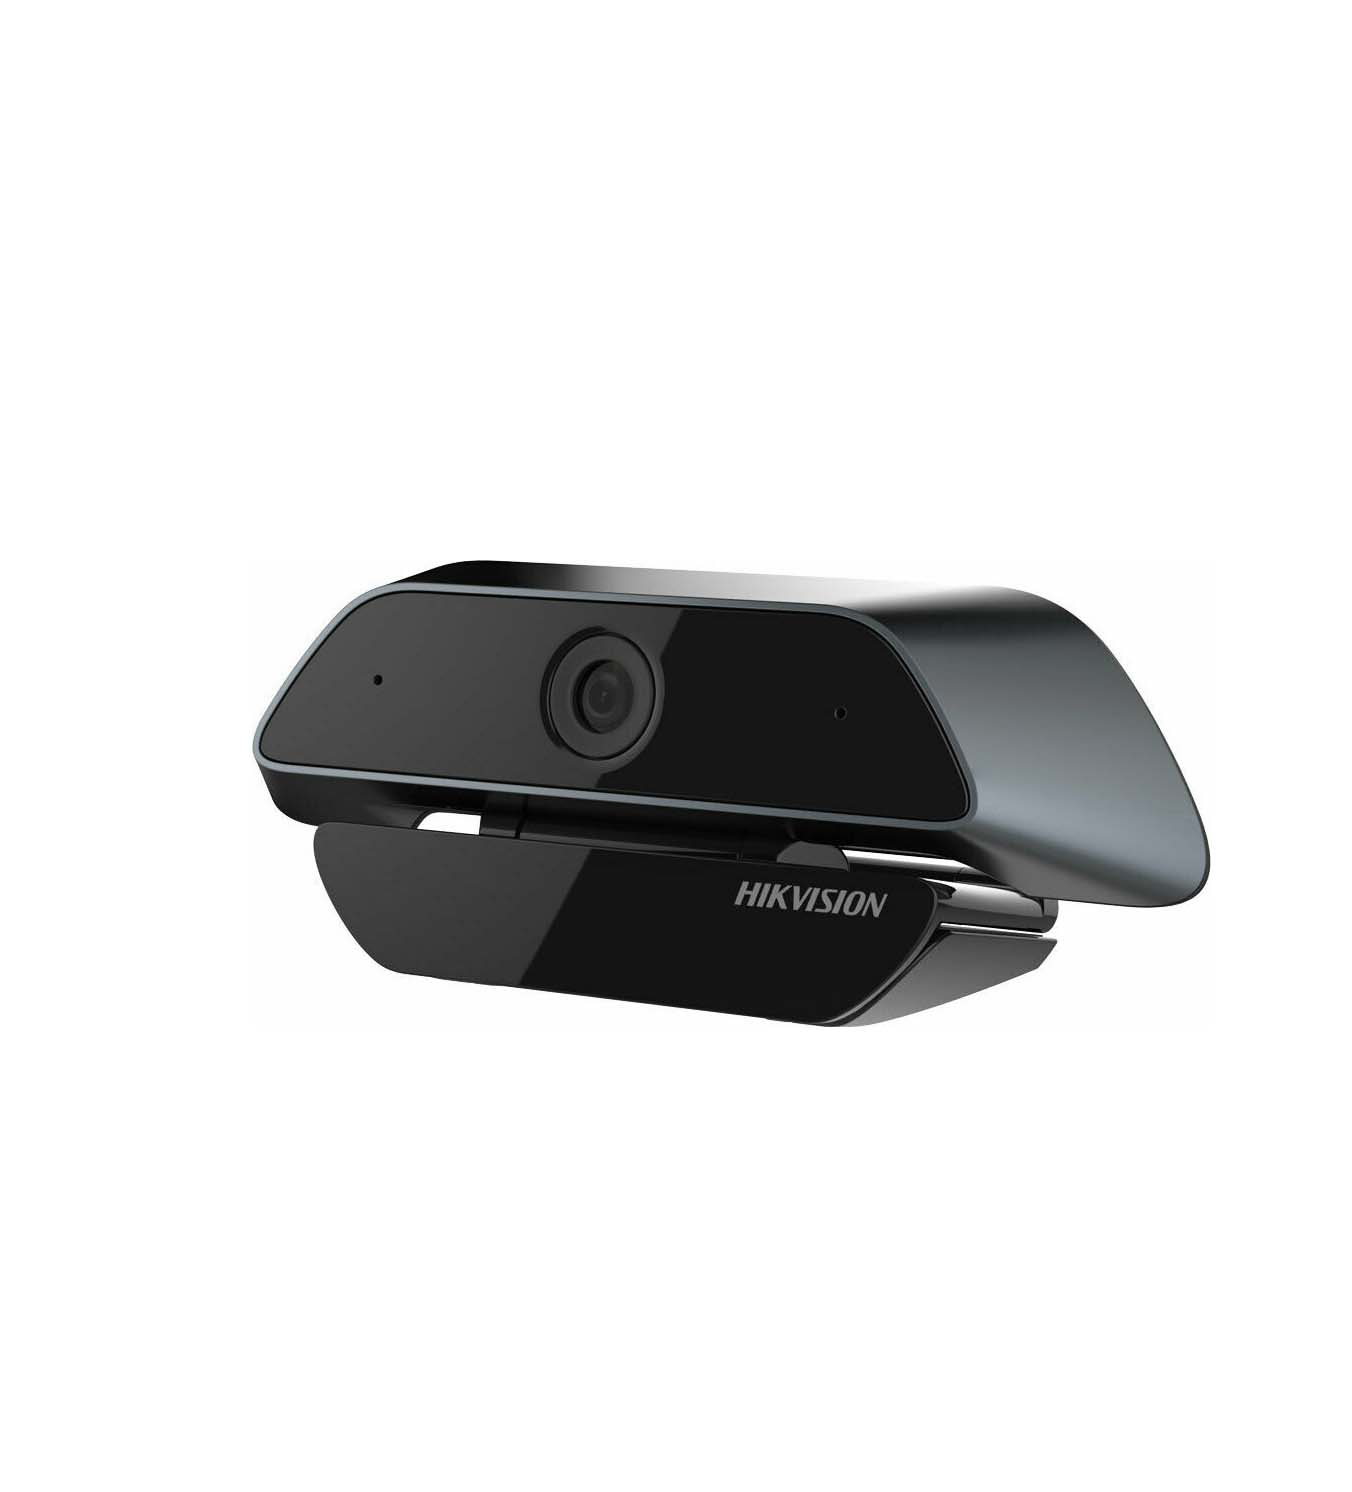 Hikvision DS-U12 1080P HD Web Camera